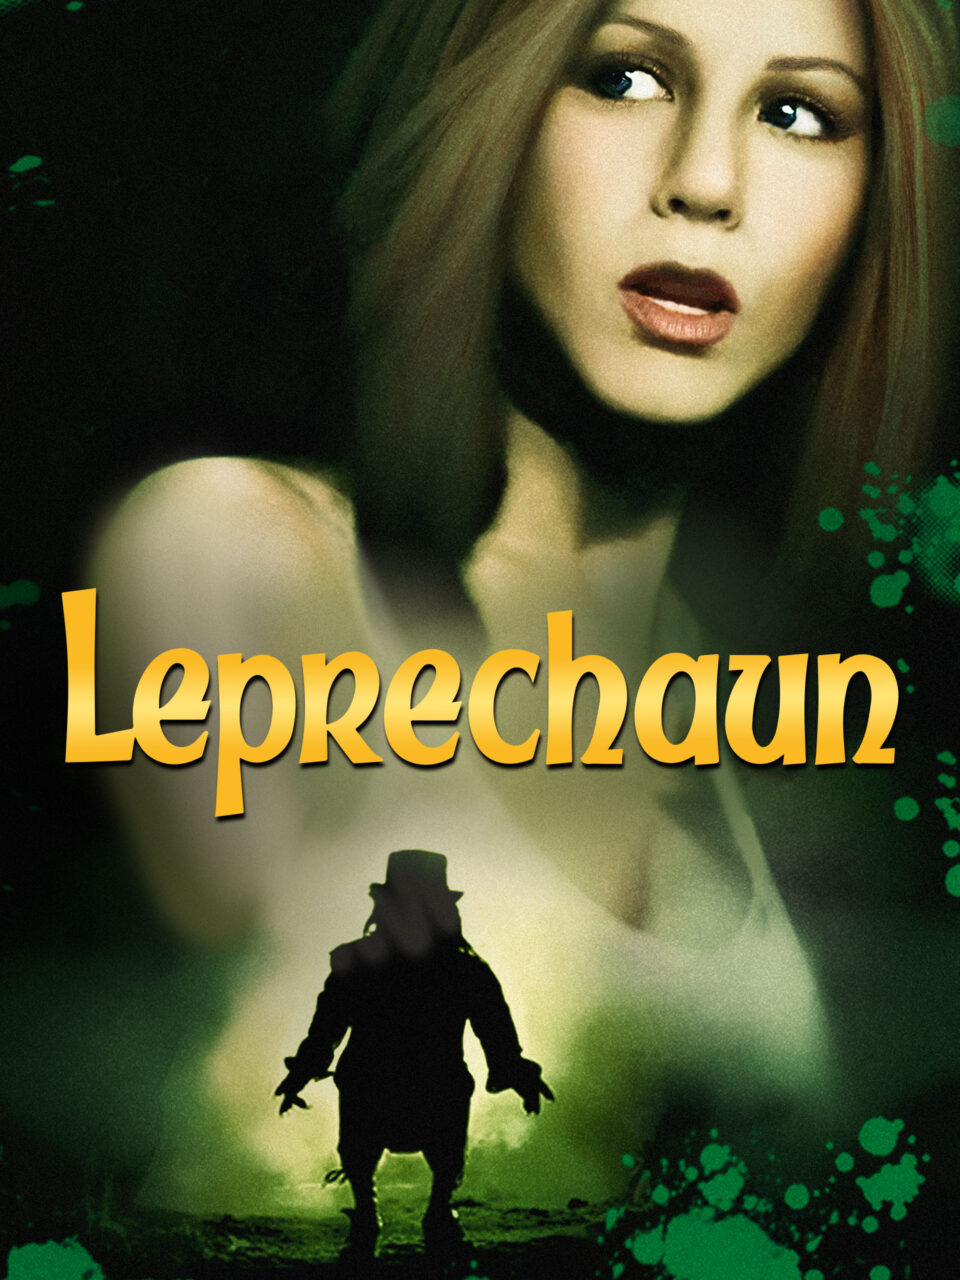 Leprechaun title (Hulu)